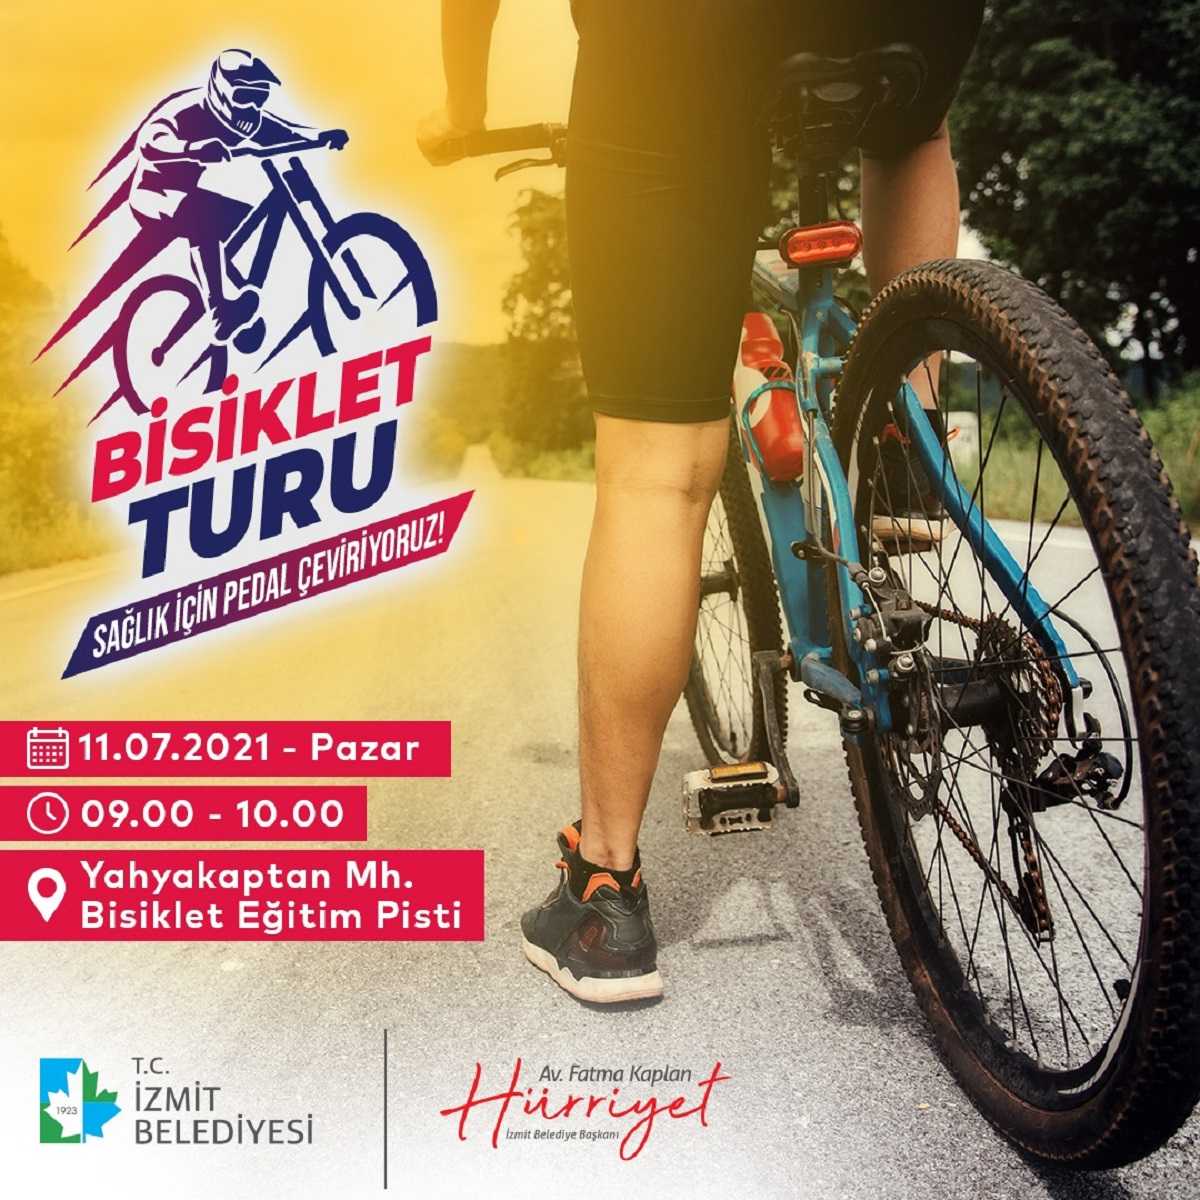 İzmit Belediyesi’nden bisiklet turu daveti